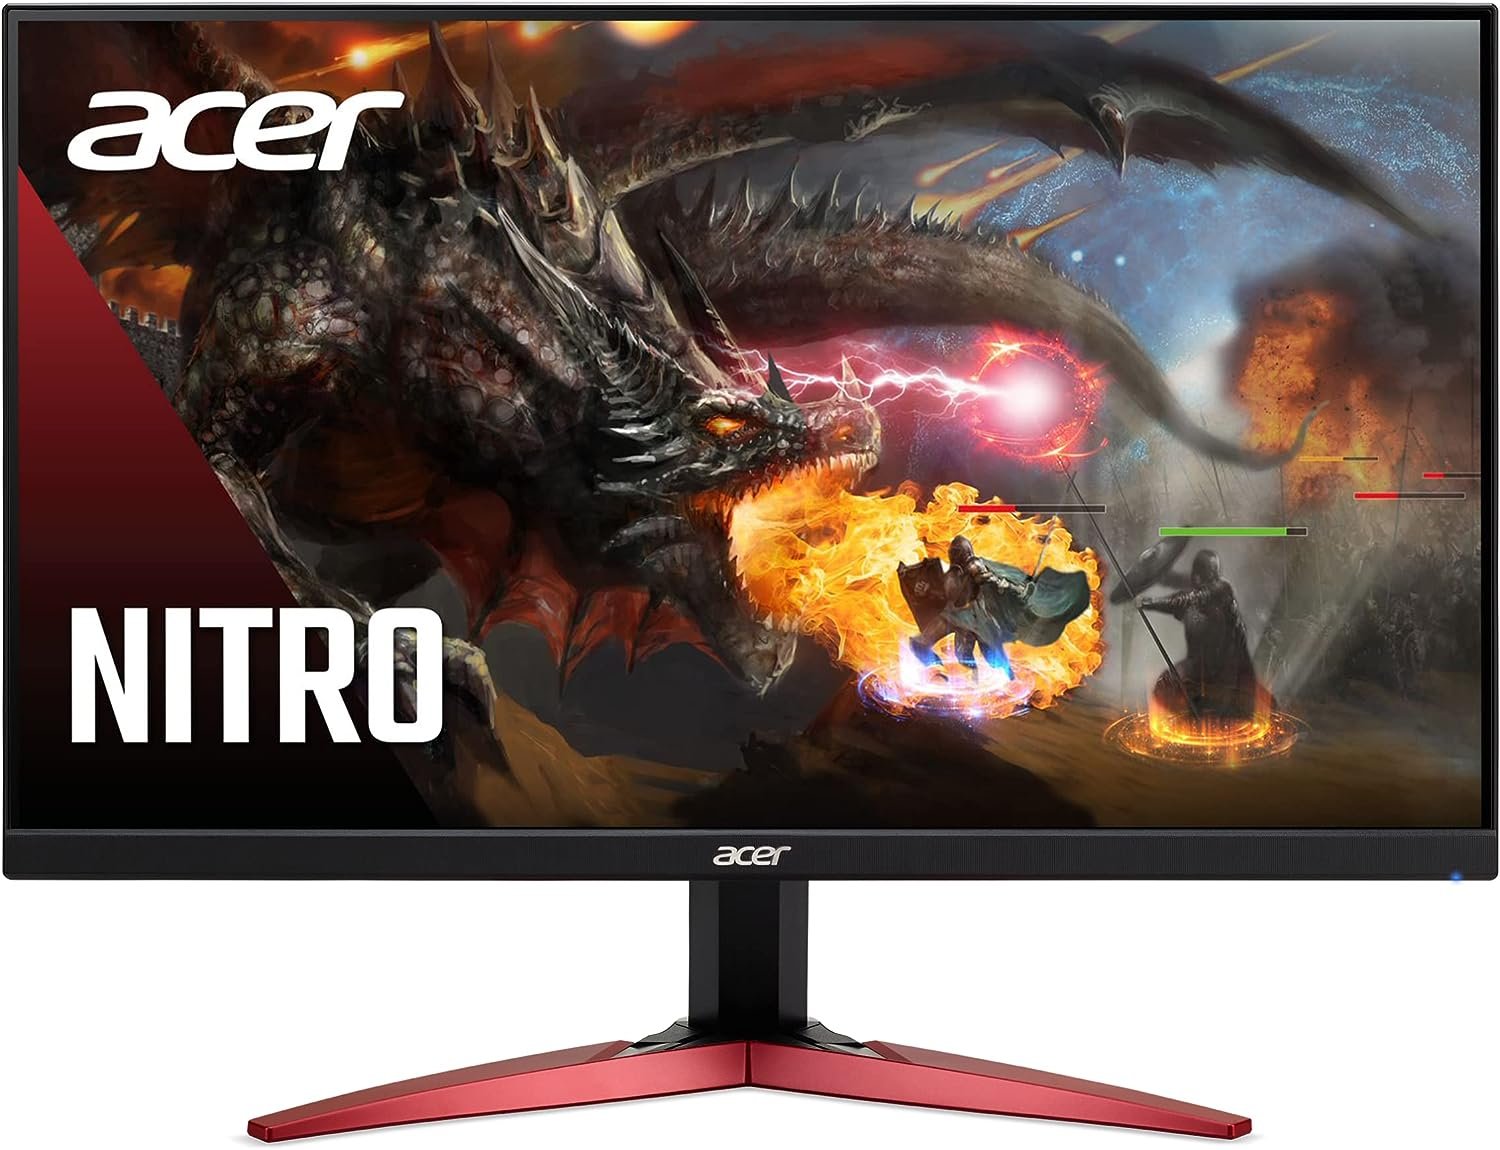 Acer Nitro KG241Y Sbiip 23.8” Full HD